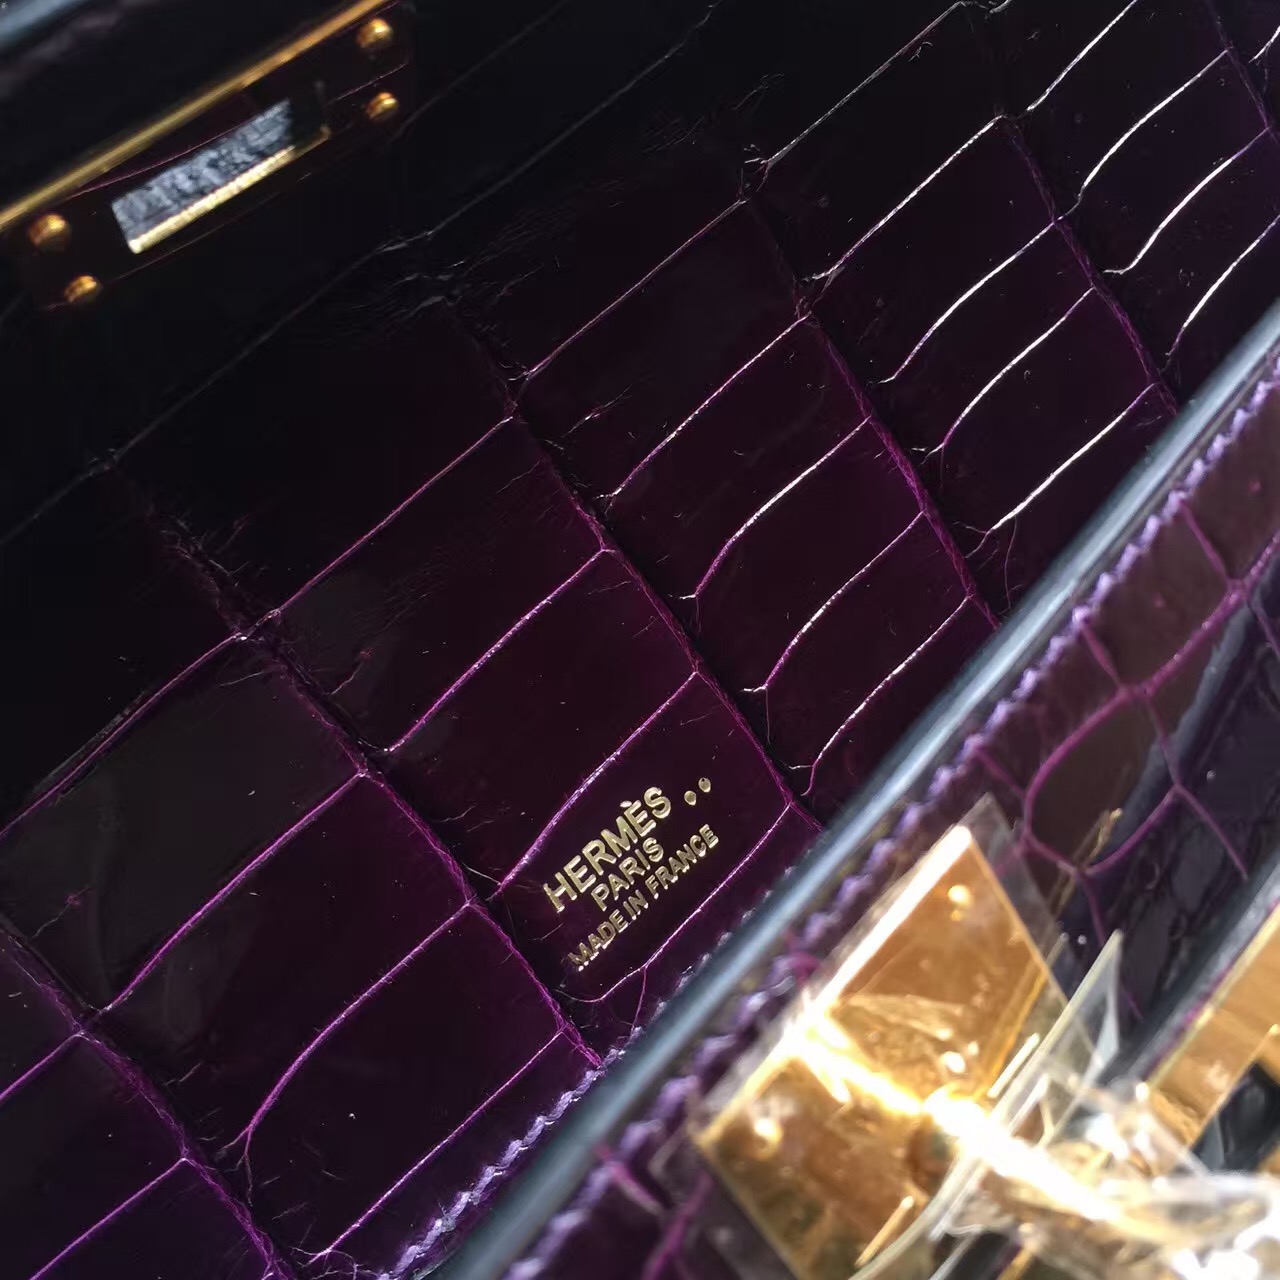 Hermes 9G Violet Crocodile Shiny Leather Kelly Cut Clutch Bag31cm